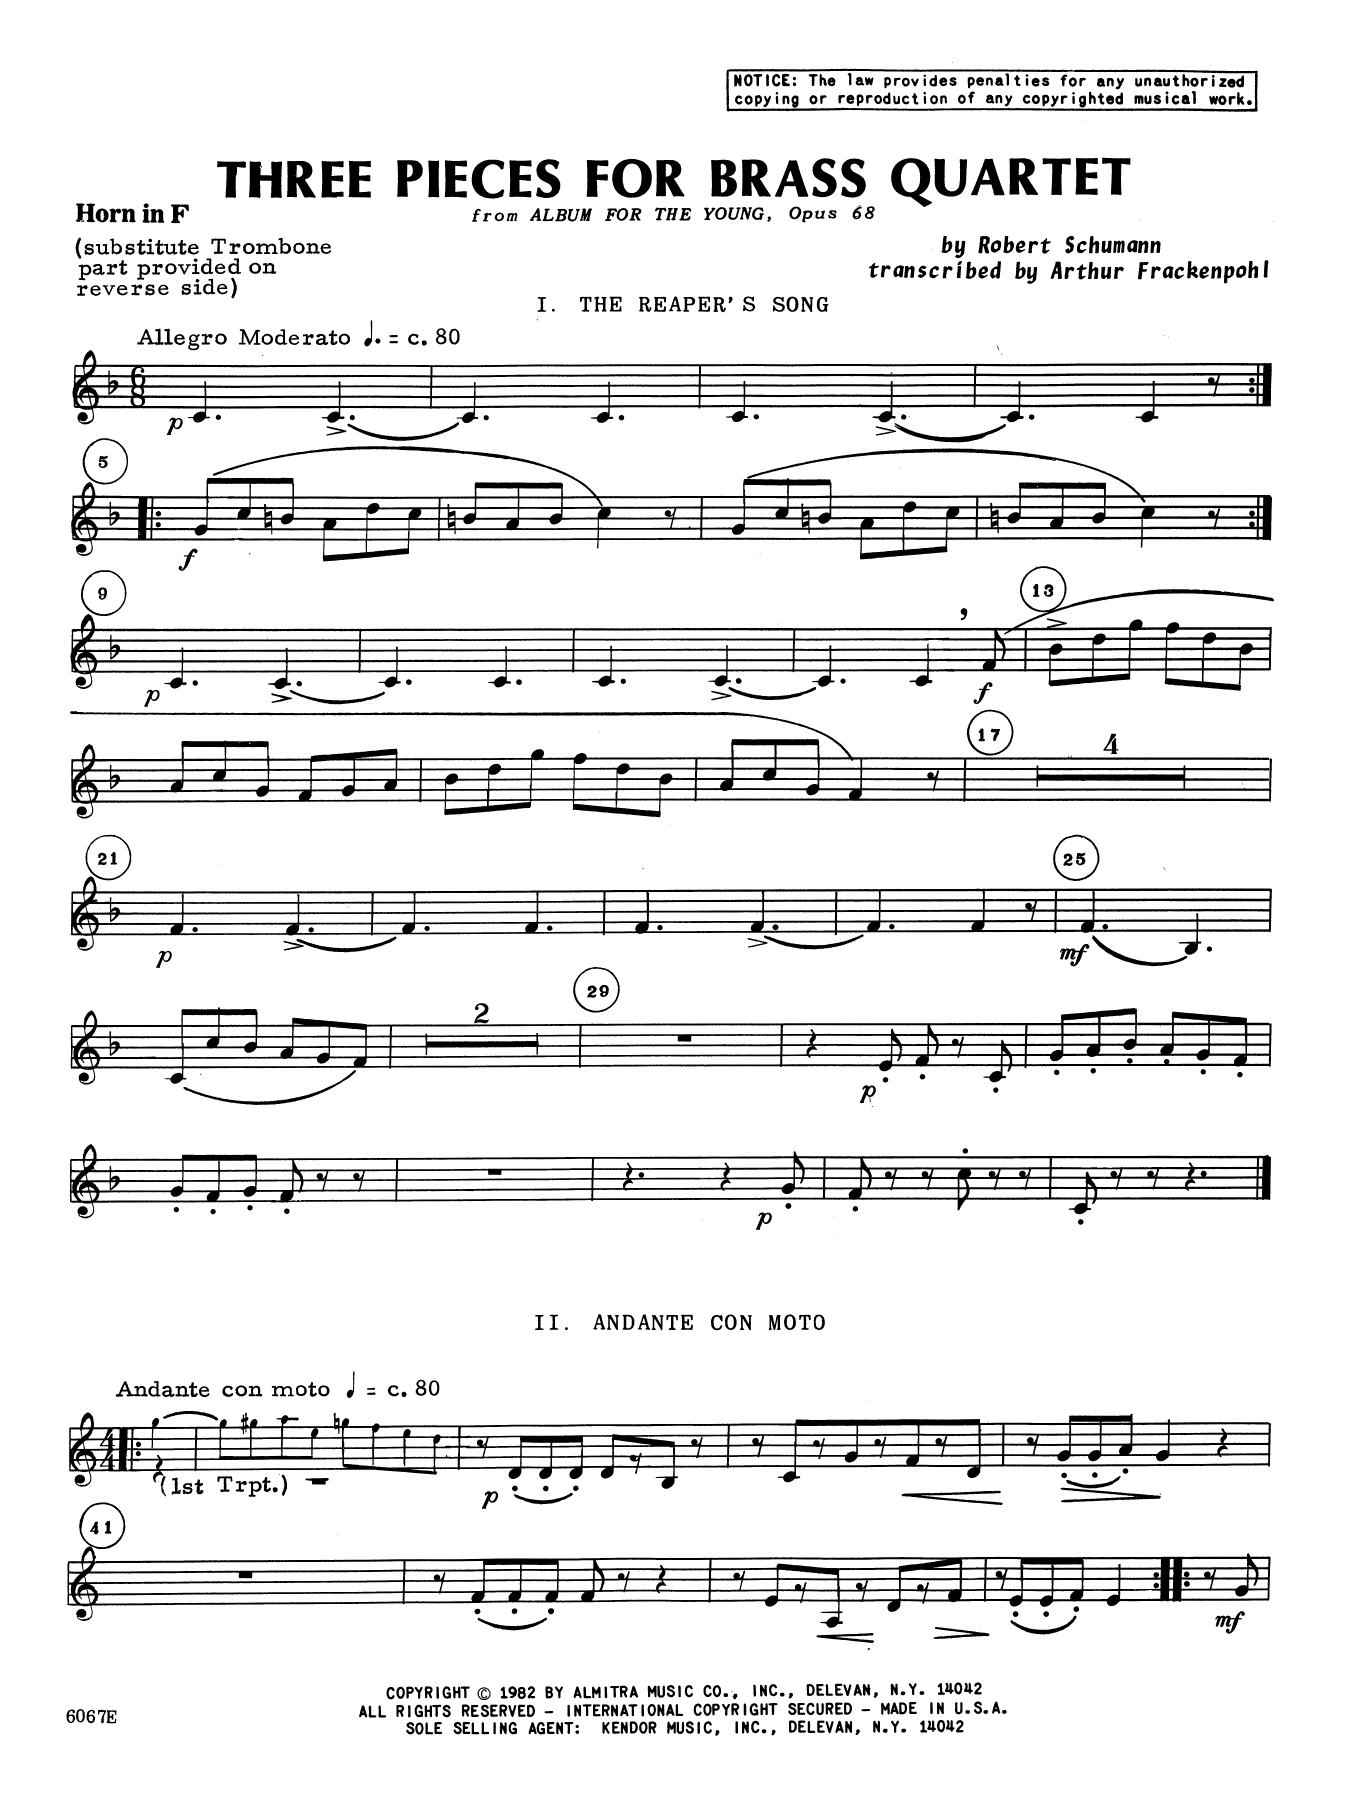 Download Arthur Frankenpohl Three Pieces for Brass Quartet - Horn i Sheet Music